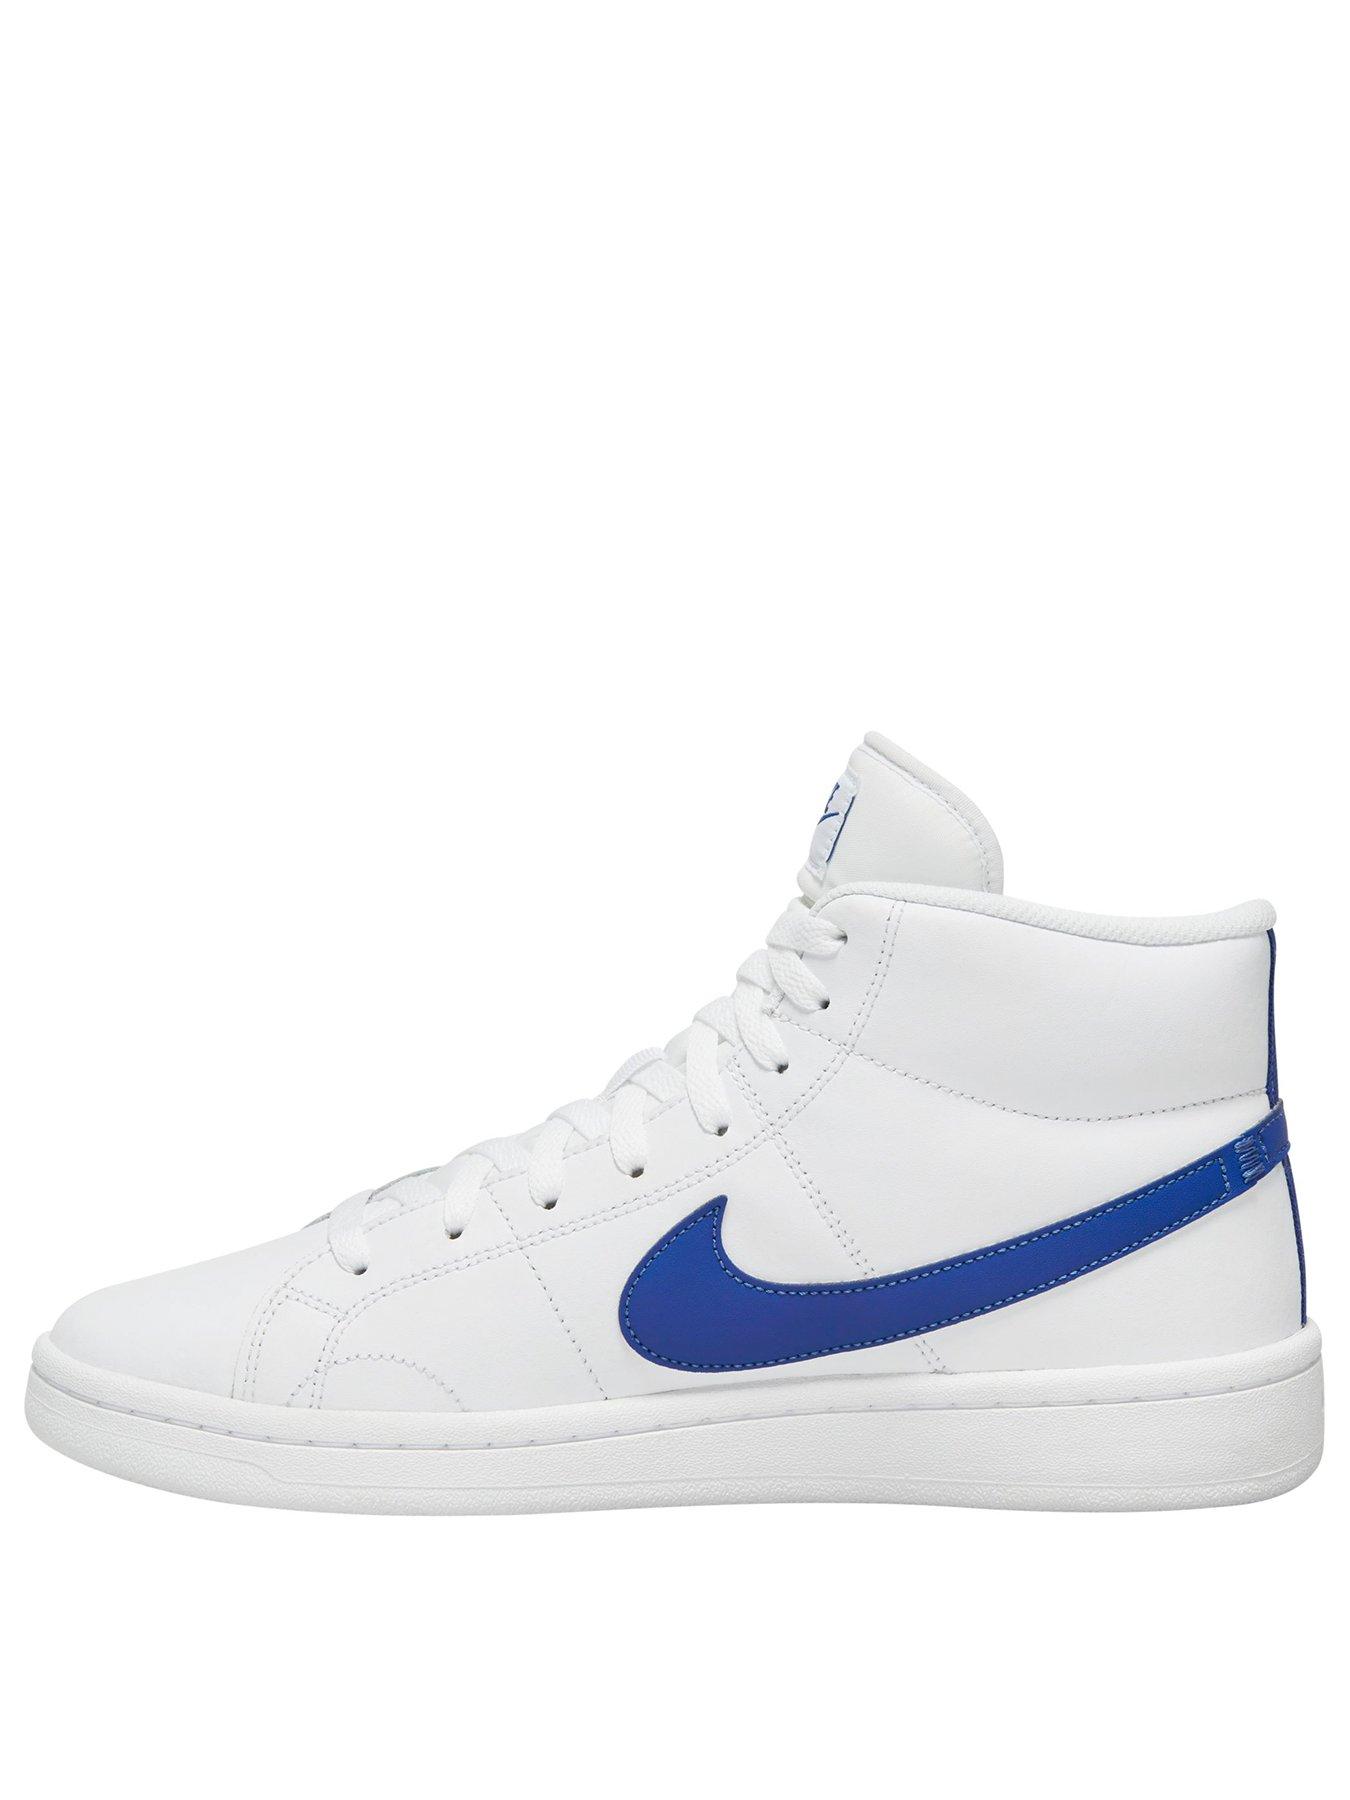 Nike Court Royale 2 Mid White/Blue littlewoods com